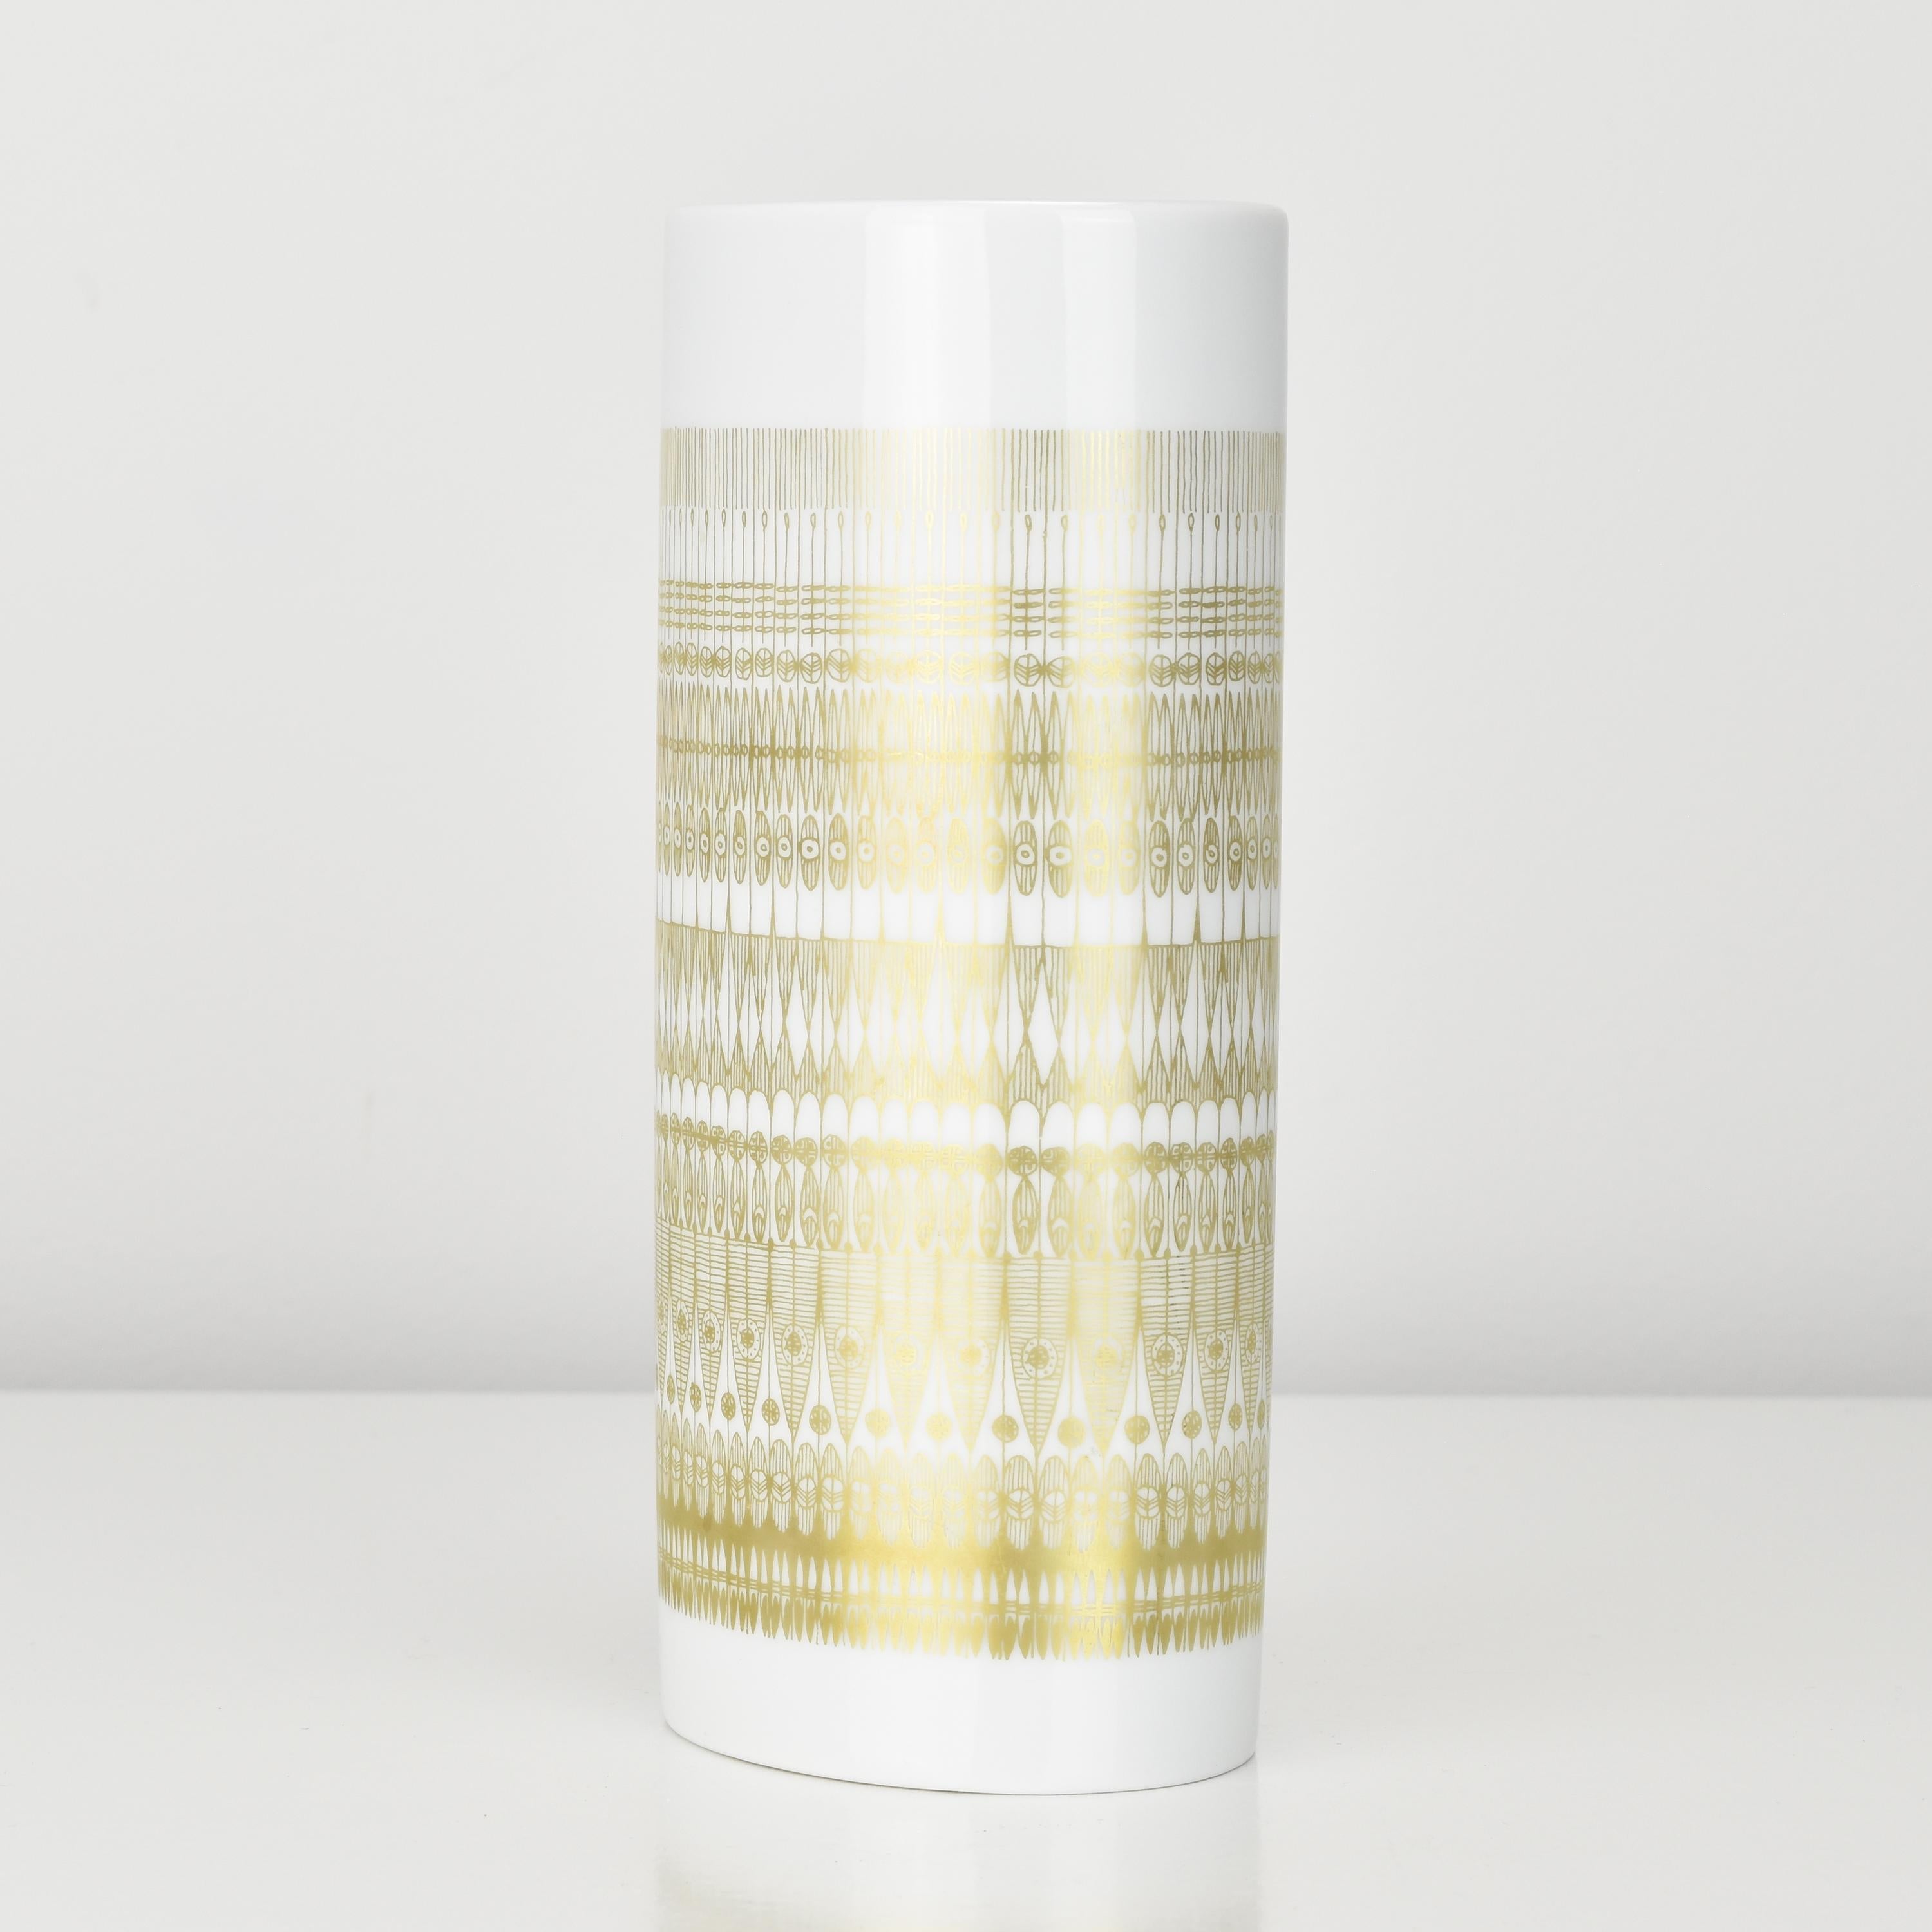 Rosenthal Studio-Line Vase White Porcelain Gold Pattern Design Hans Theo Baumann In Good Condition For Sale In Bad Säckingen, DE